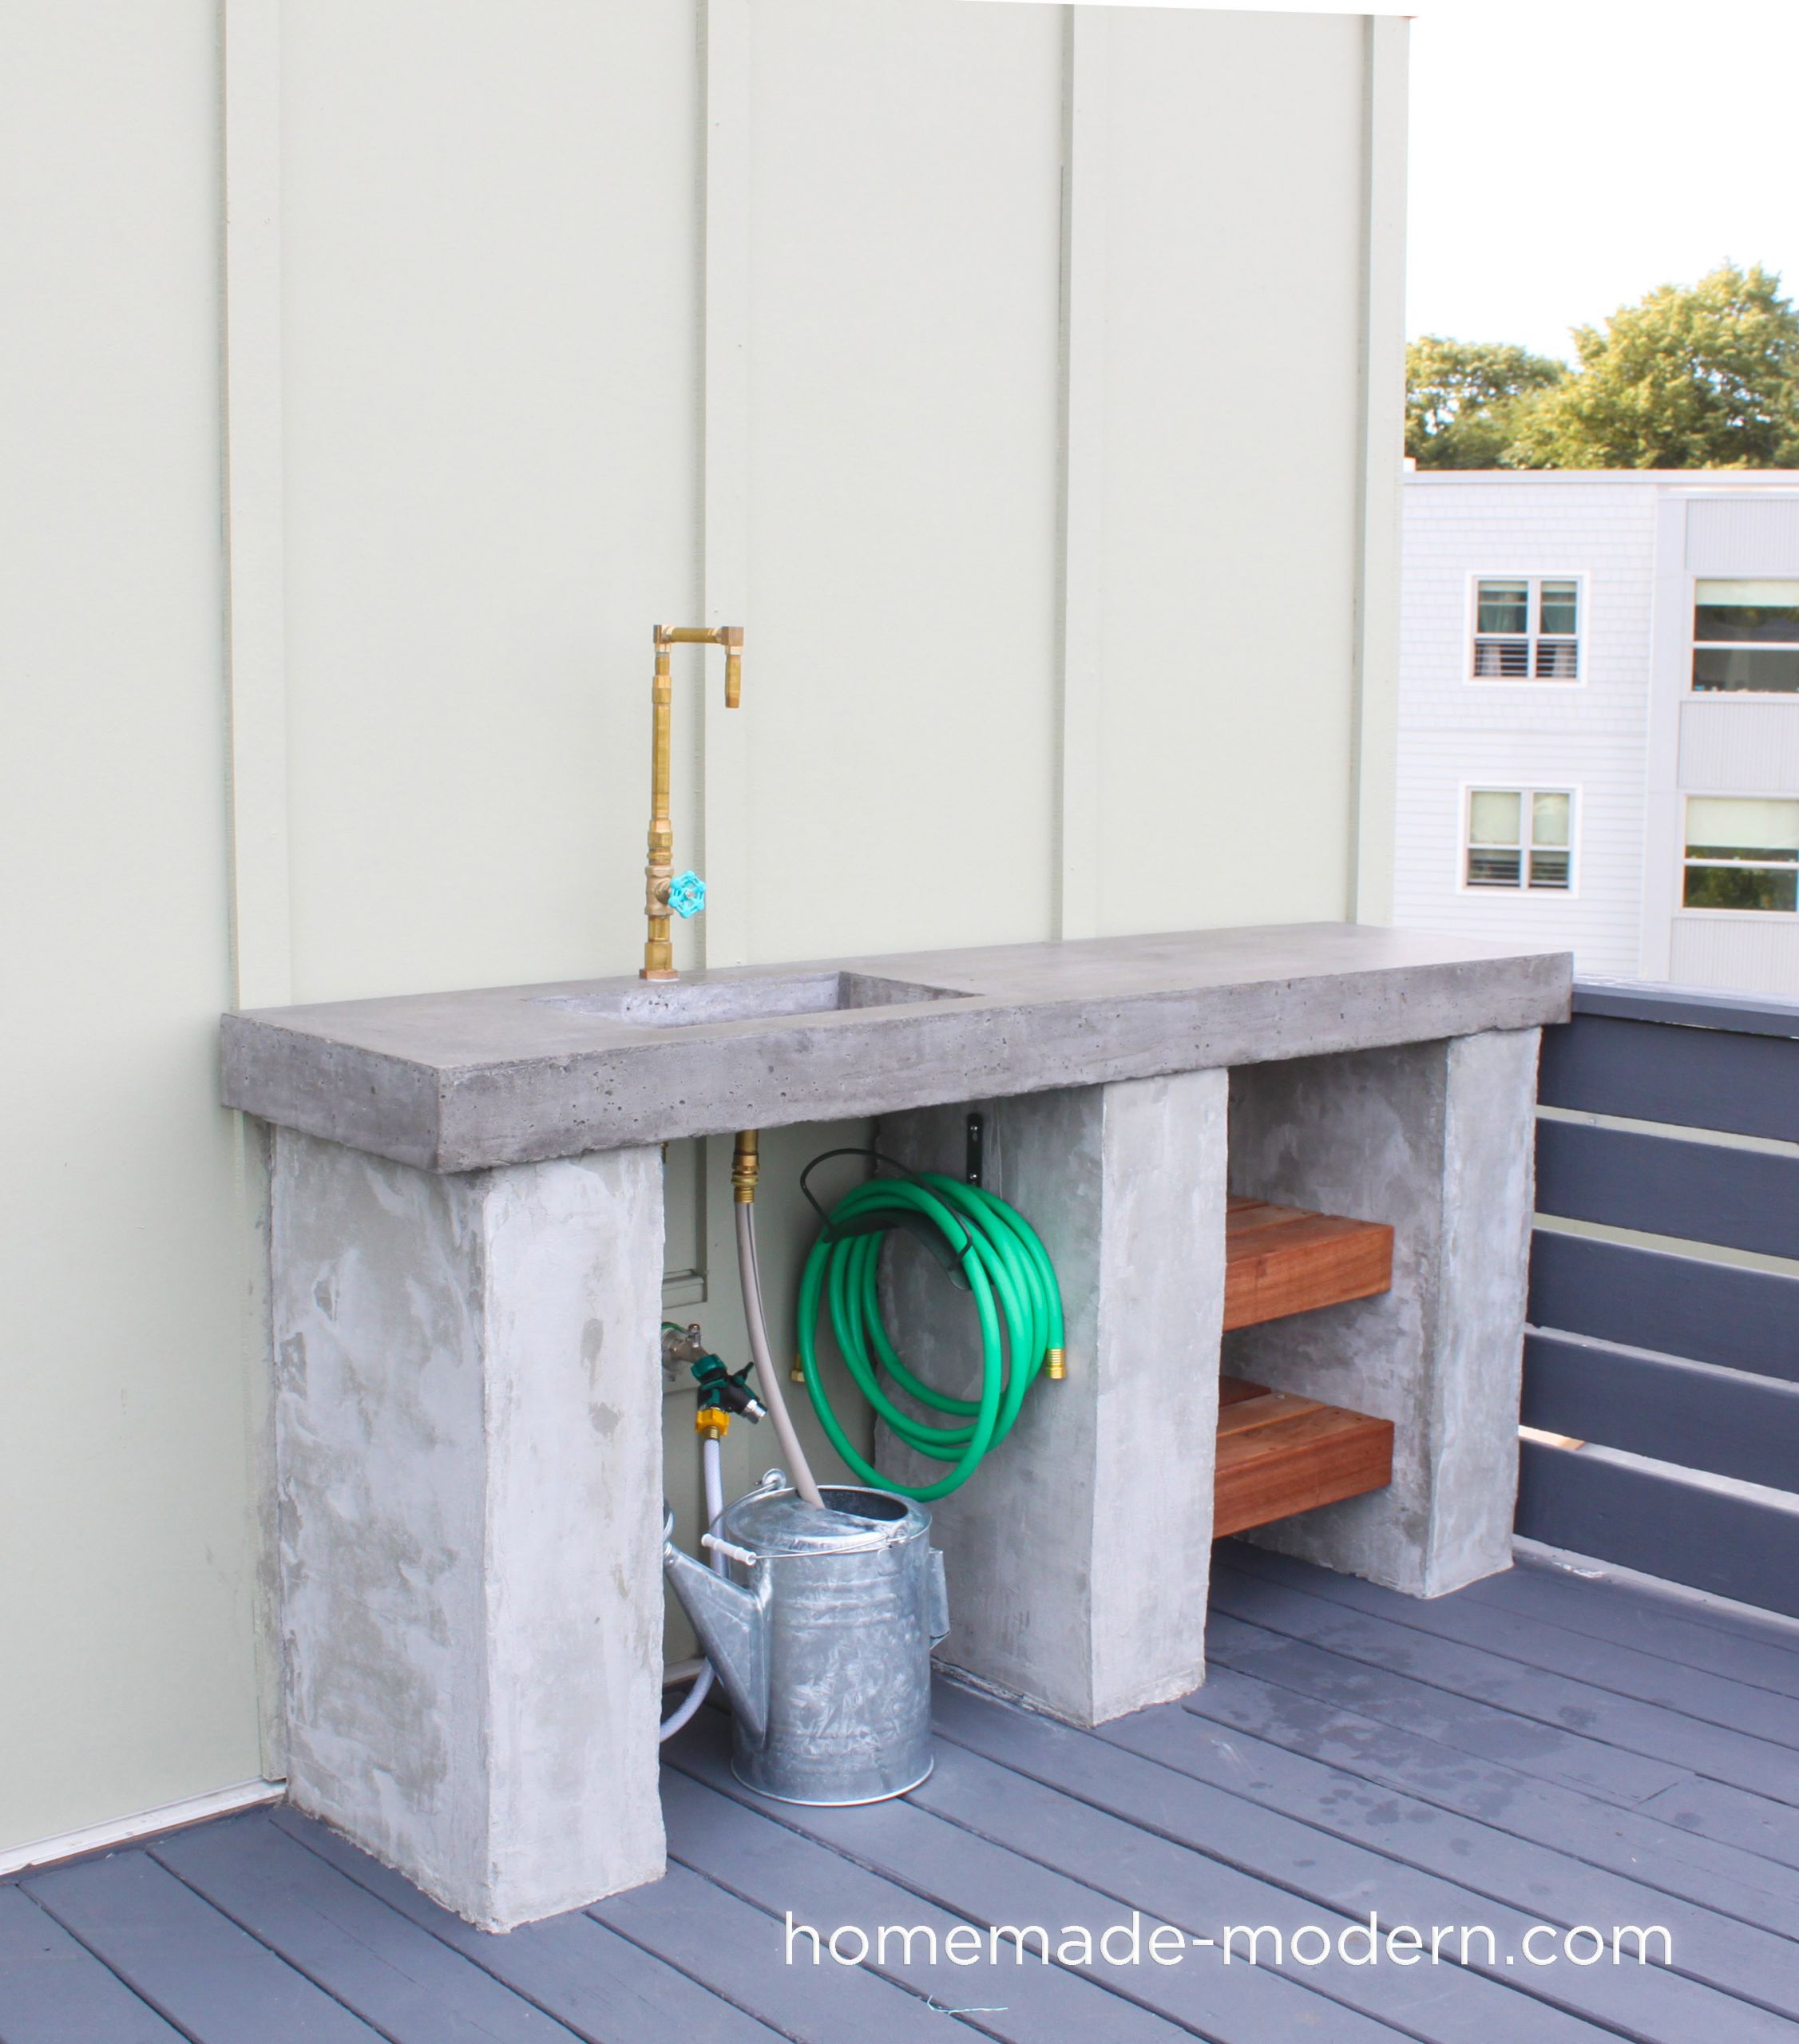 Homemade Outdoor Kitchen
 HomeMade Modern EP96 DIY Outdoor Kitchen with Concrete